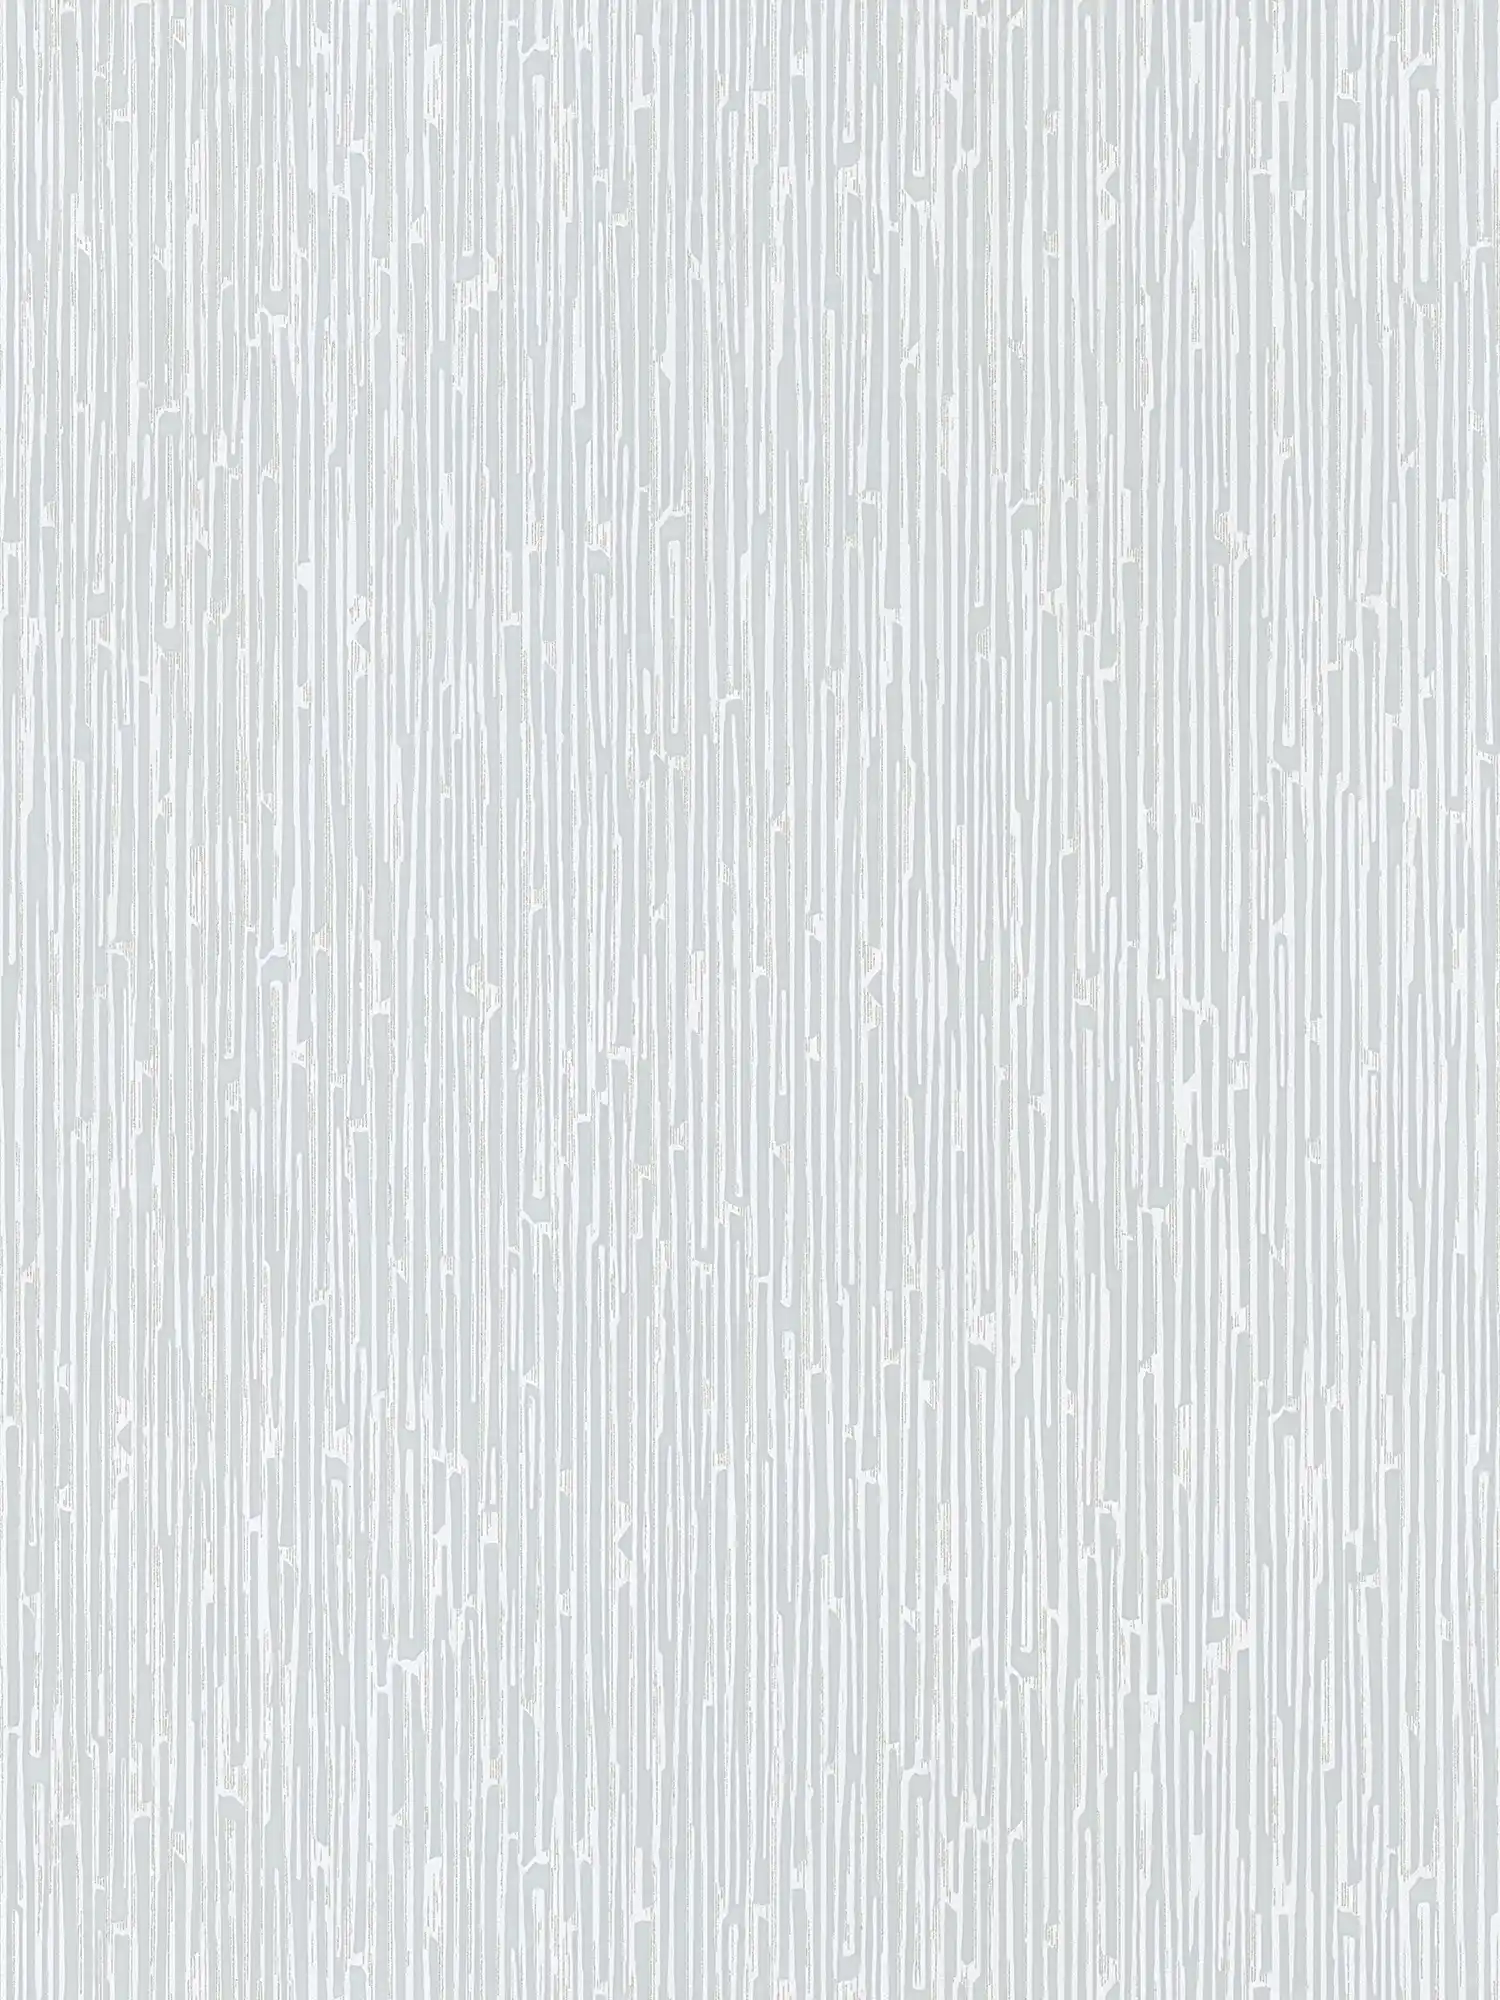         Mustertapete Grau mit Prägestruktur & abstraktem Muster
    